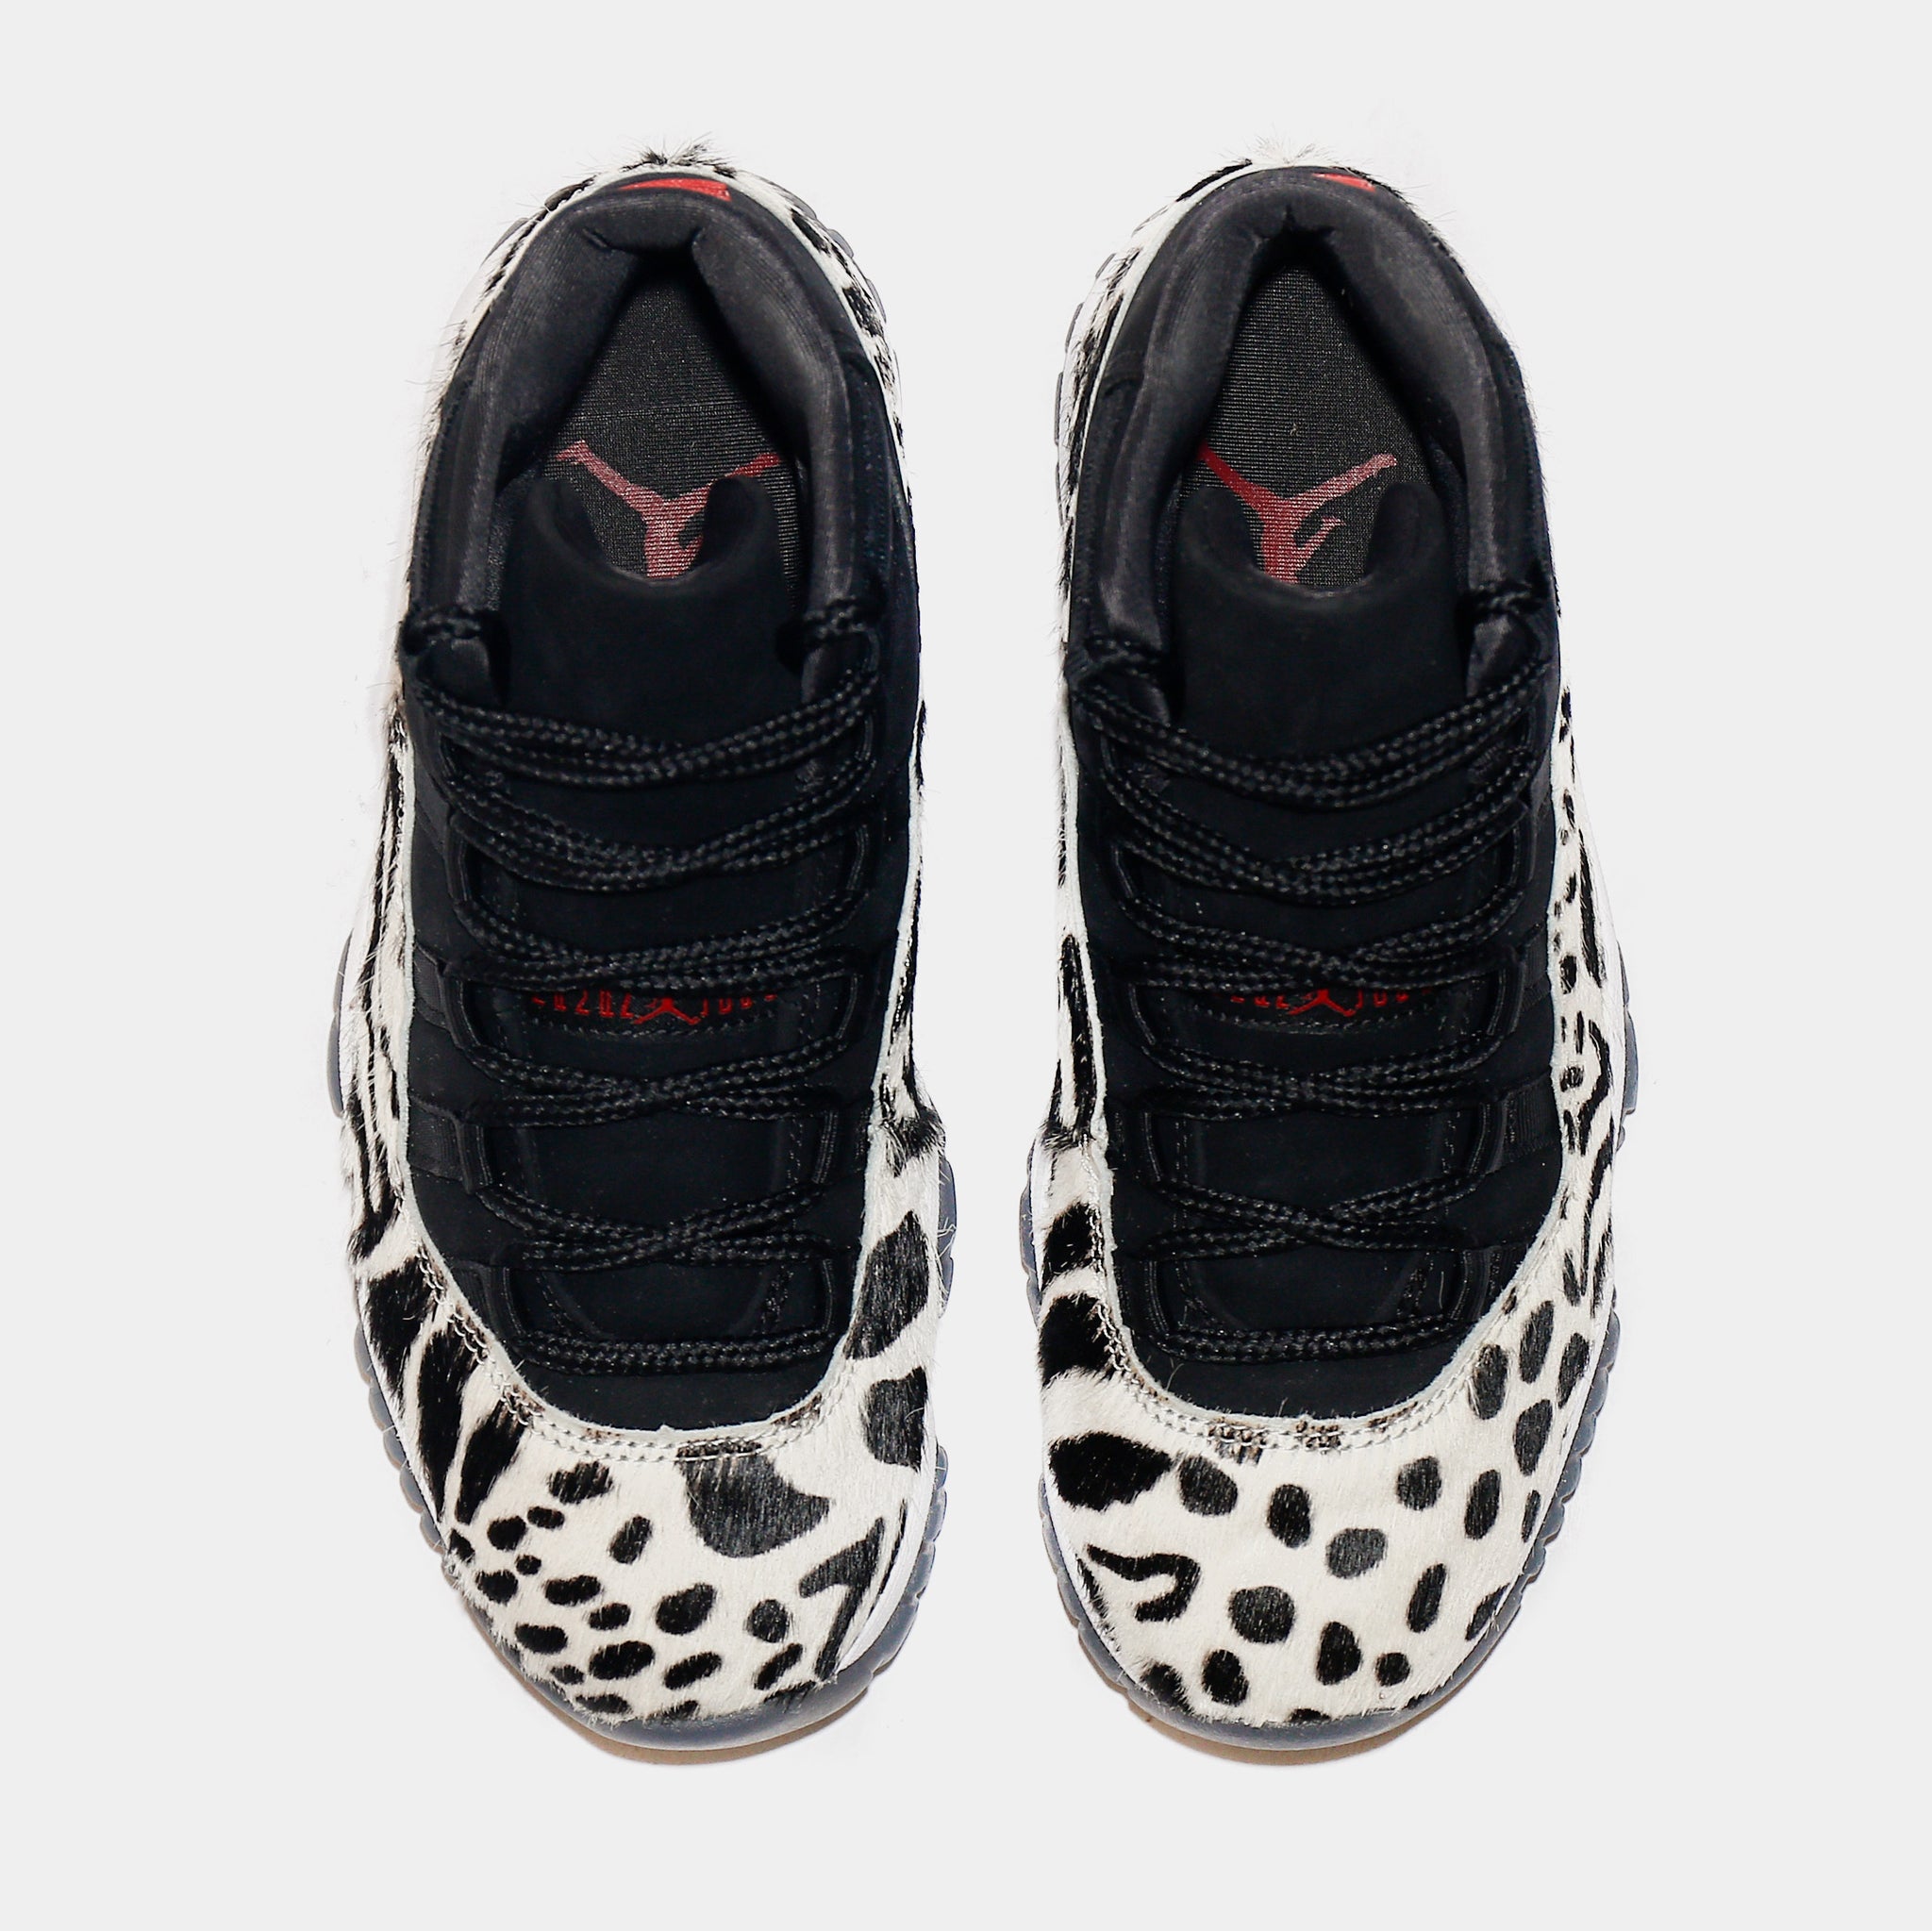 Jordan Air Jordan 11 Retro Black and White Womens Lifestyle Shoe